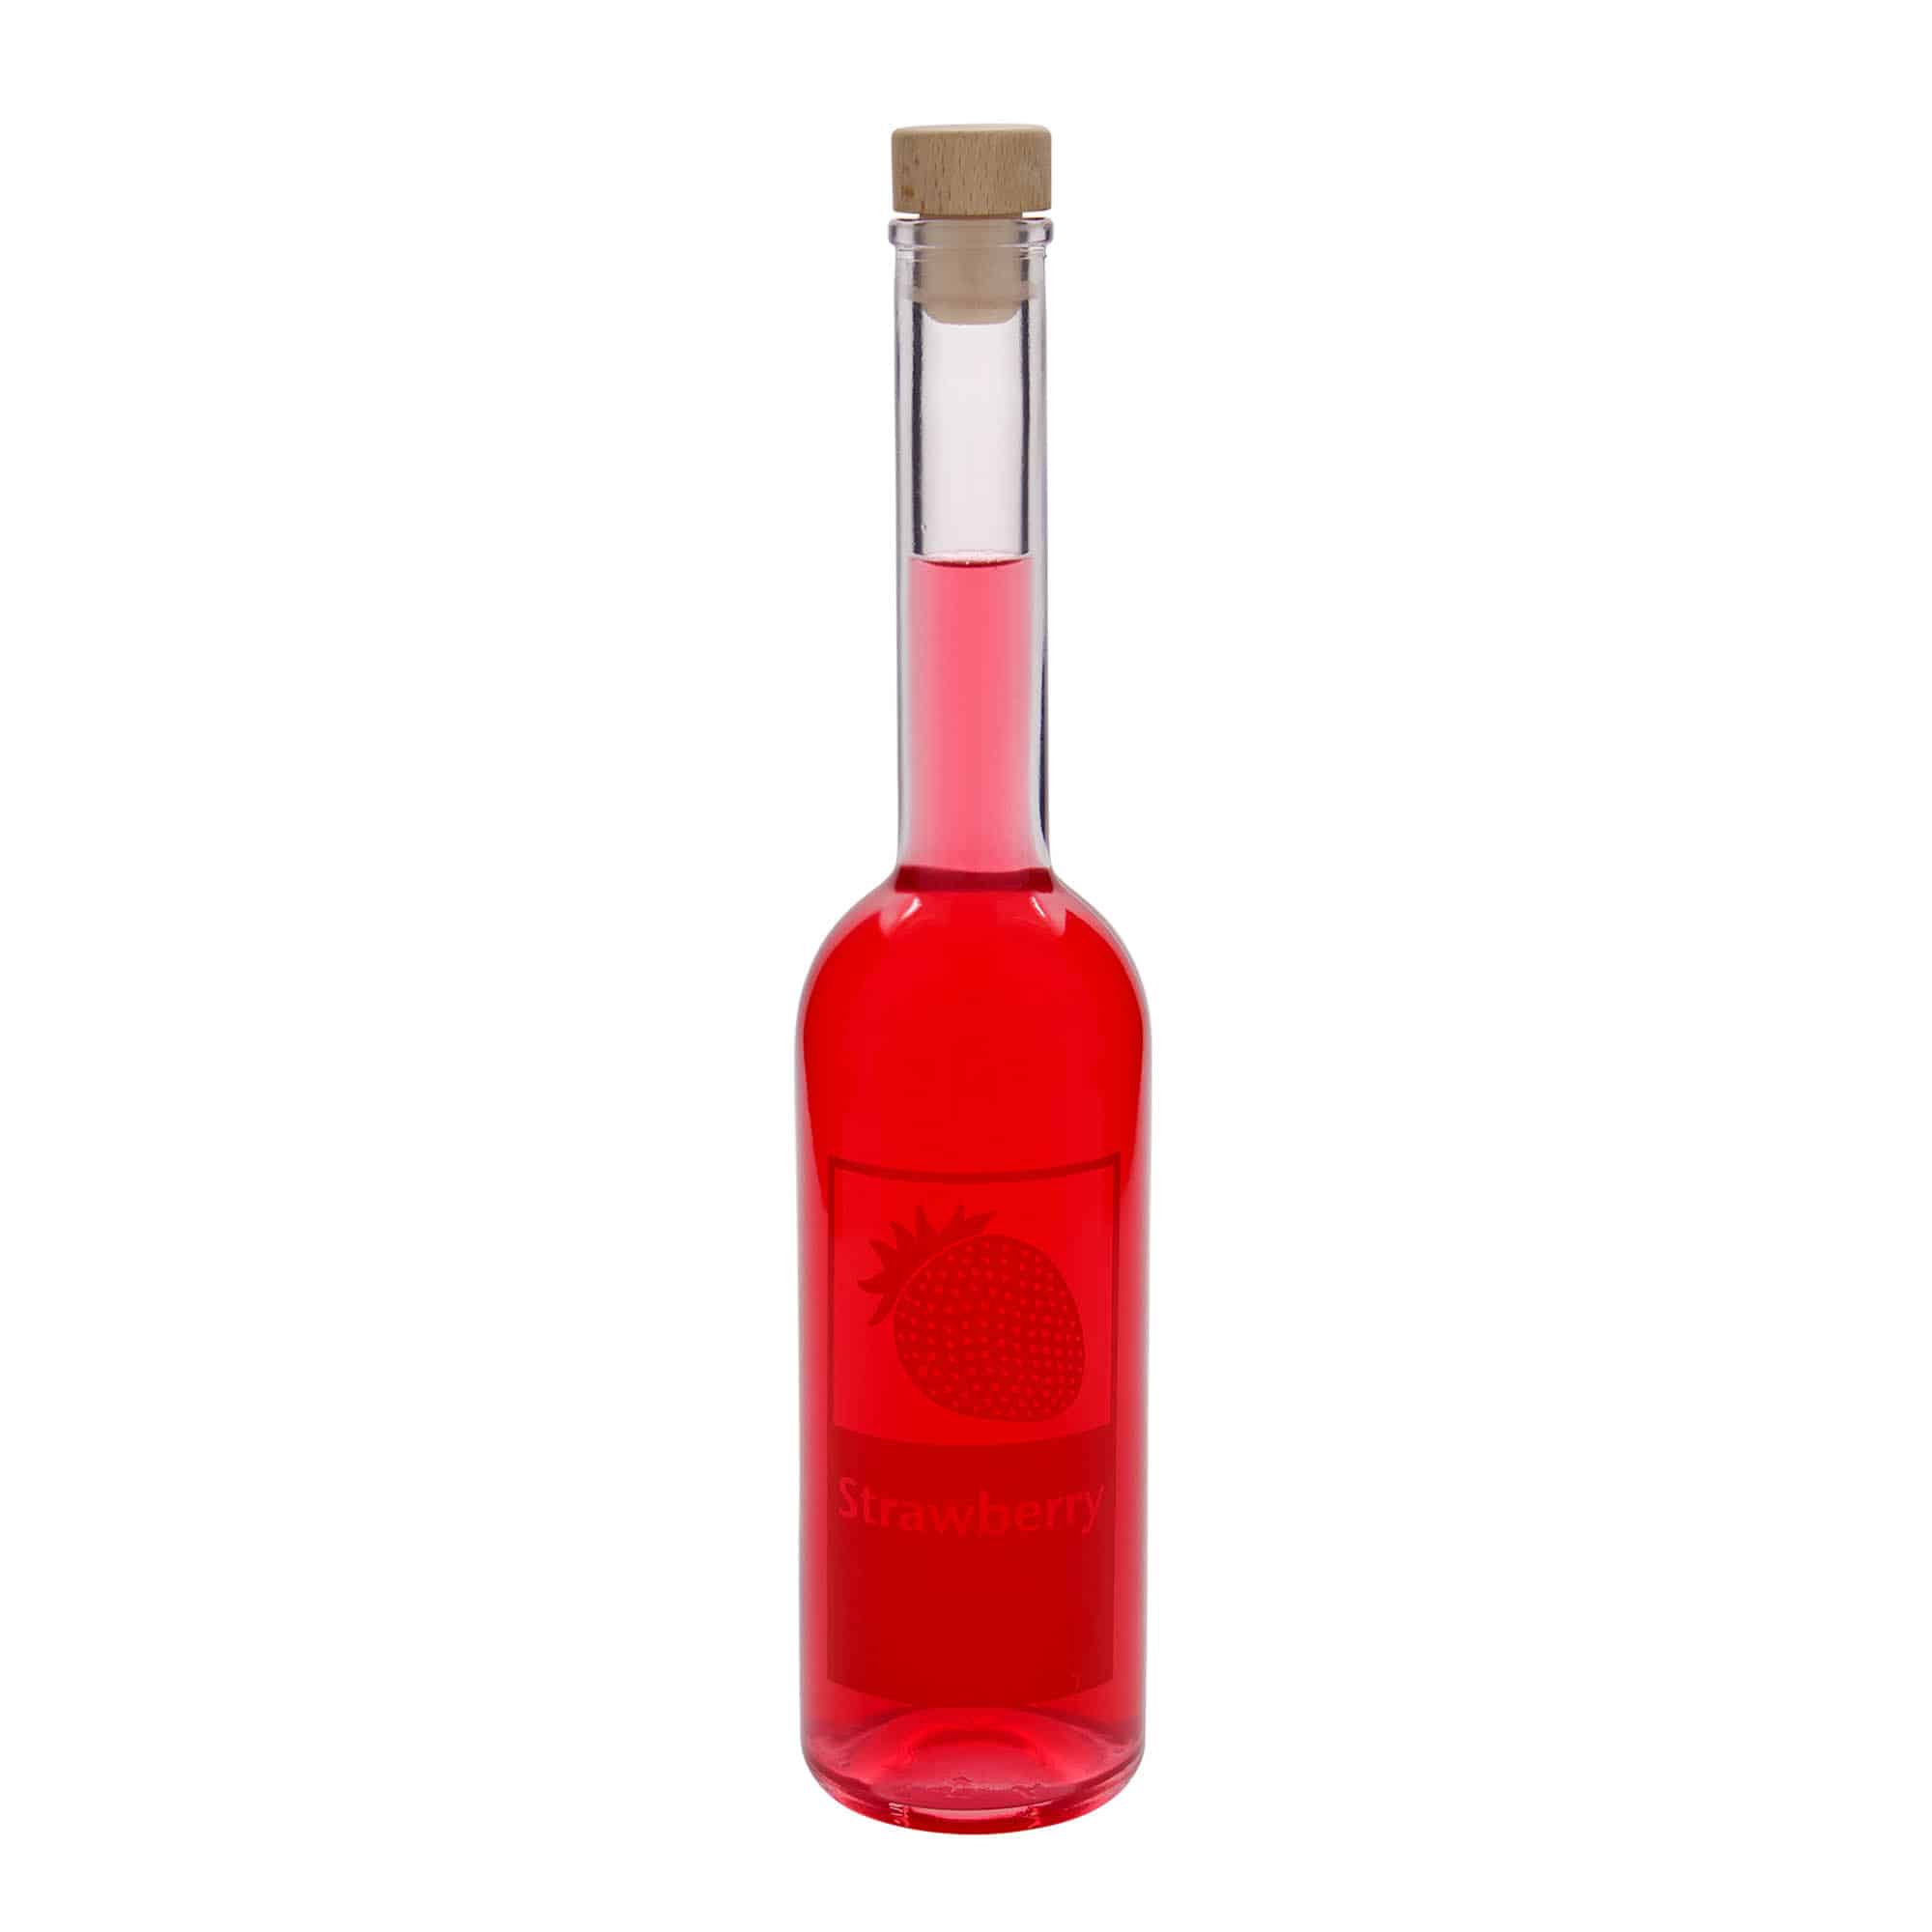 500 ml glass bottle 'Opera', print: Strawberry, closure: cork